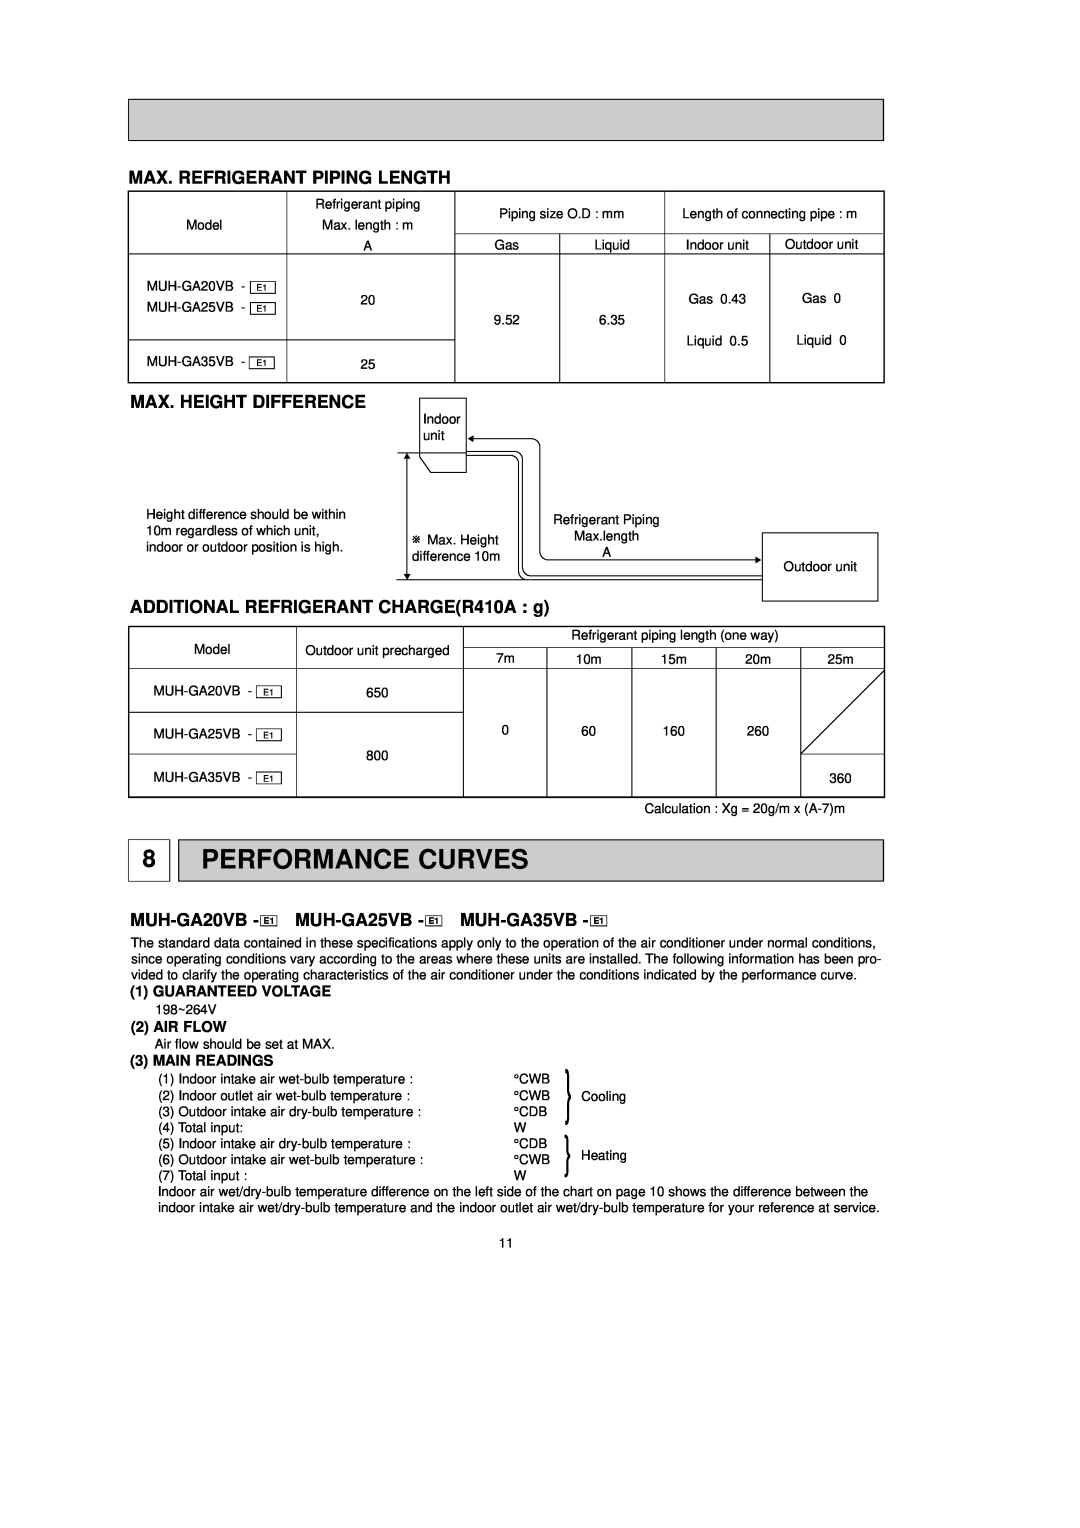 Pioneer Performance Curves, Max. Refrigerant Piping Length, Max. Height Difference, MUH-GA20VB- E1, MUH-GA25VB- E1 